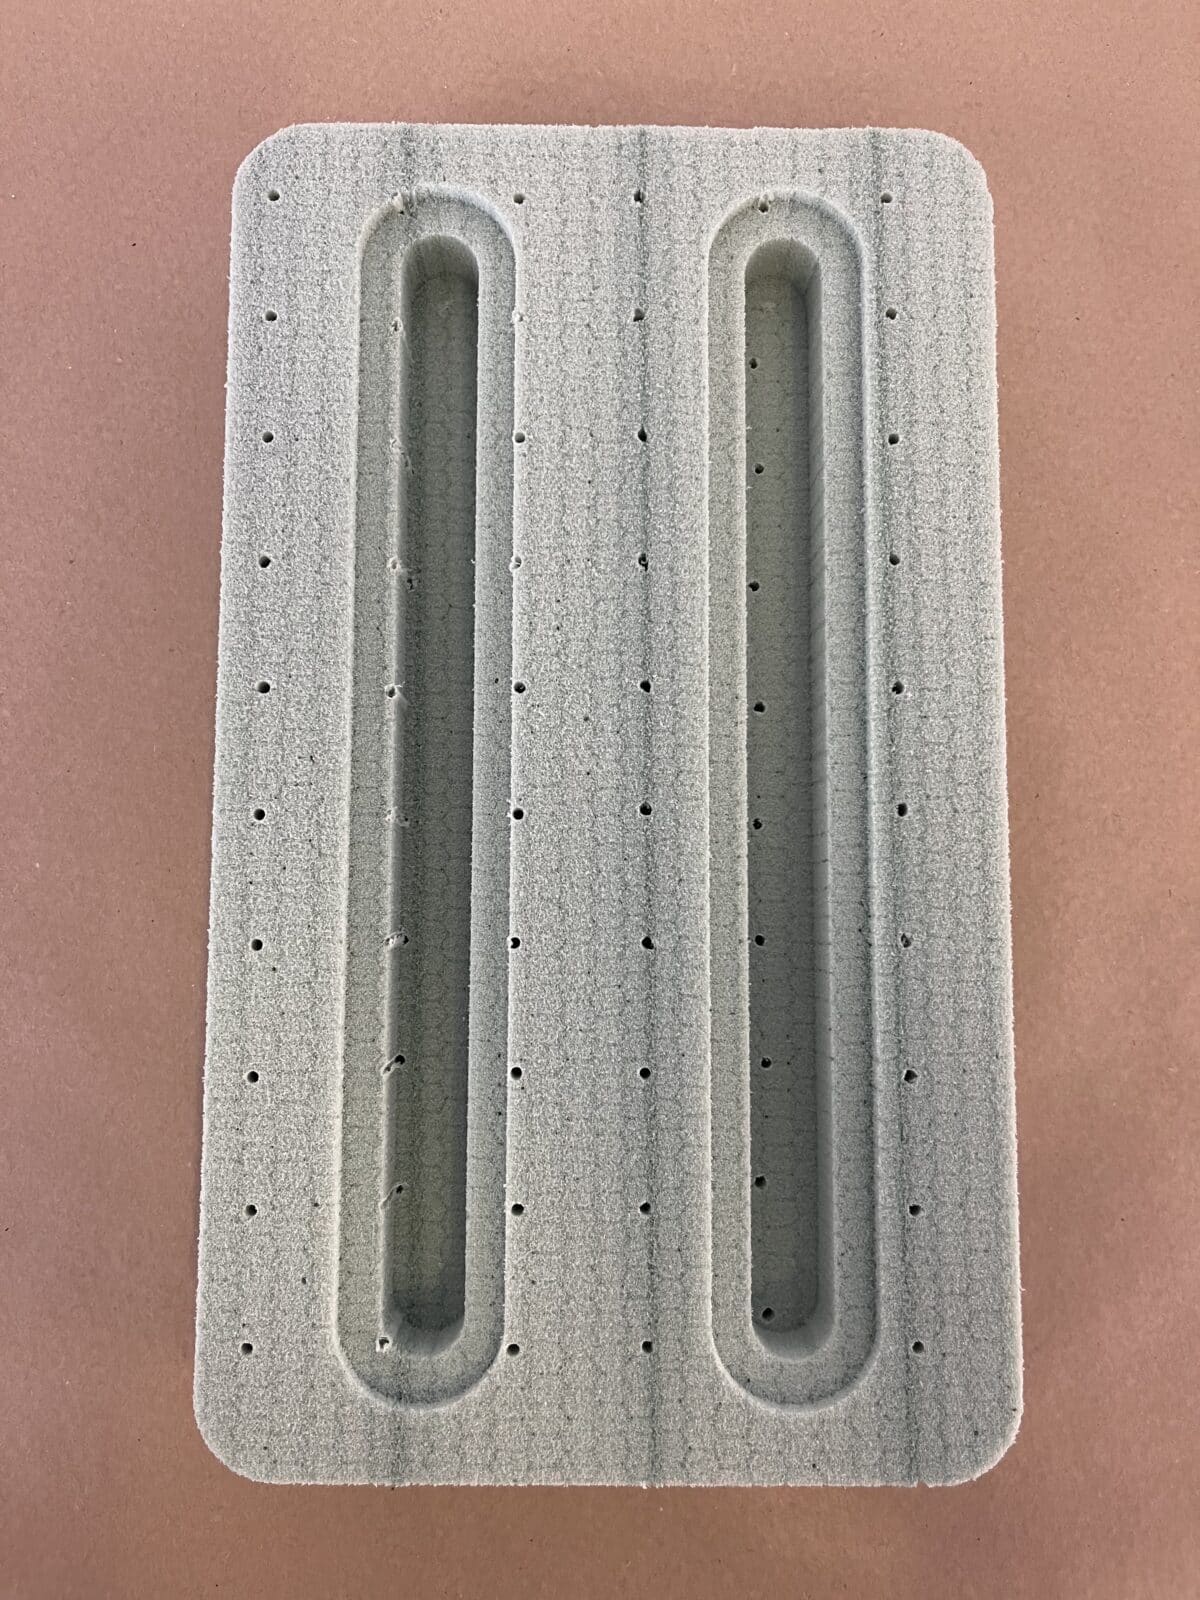 PET foam puck for Standard foil tracks